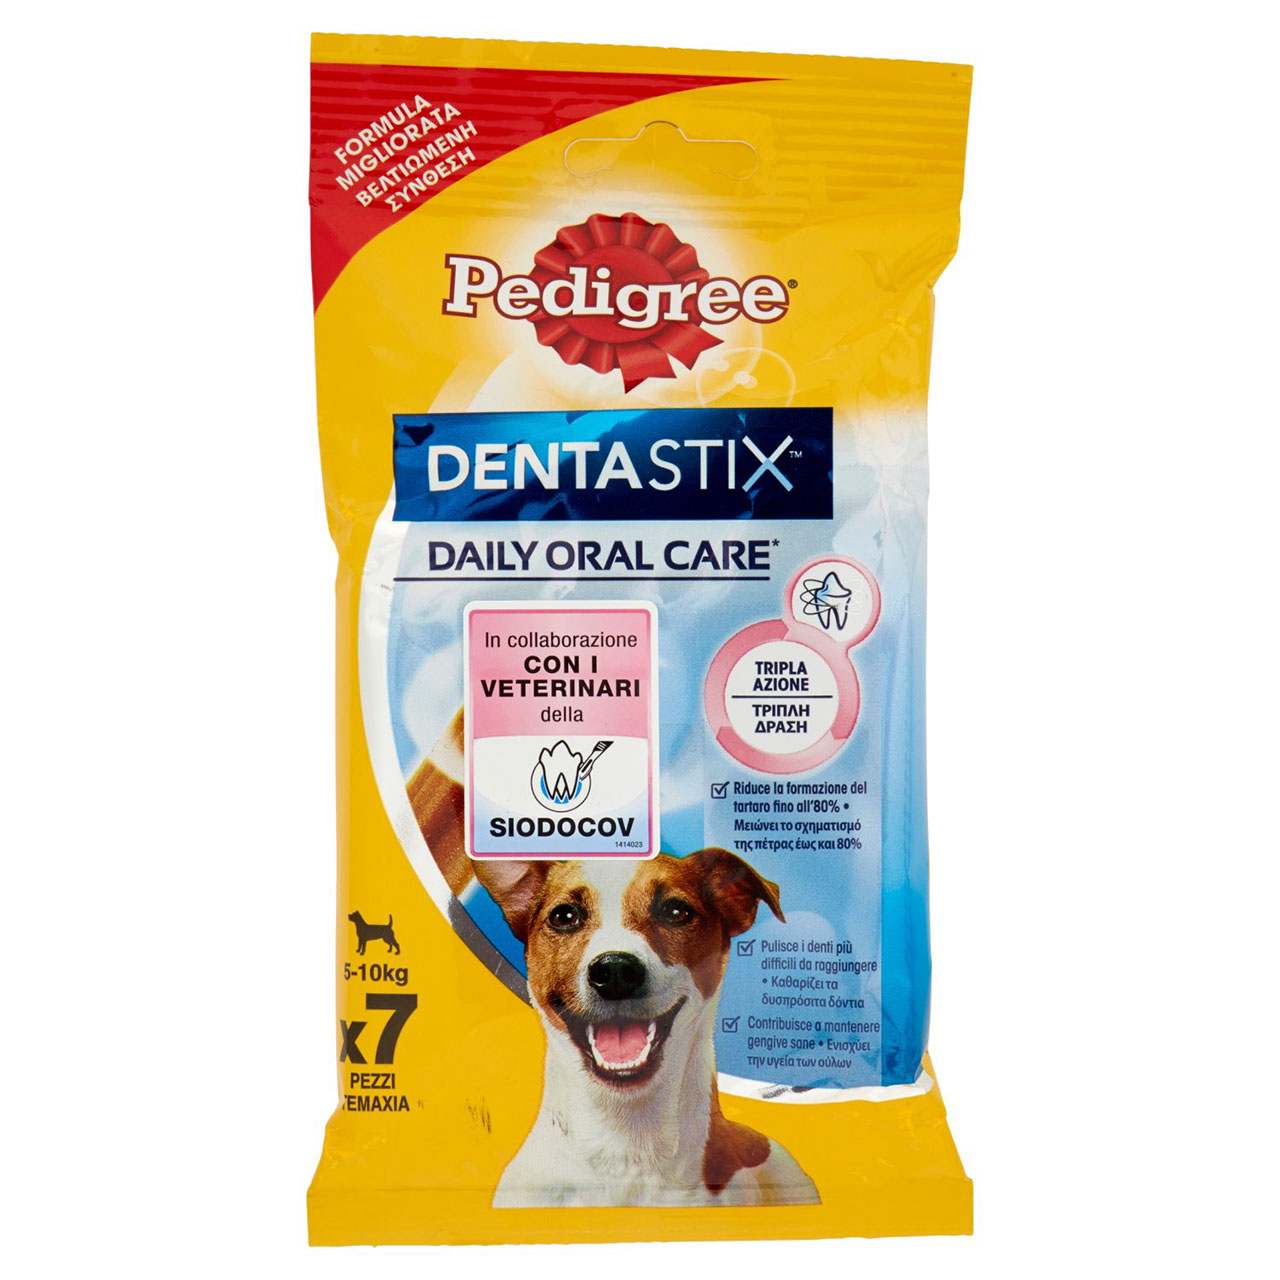 Pedigree DentaStix Daily Oral Care* 5-10 kg 7 Pezzi 110 g